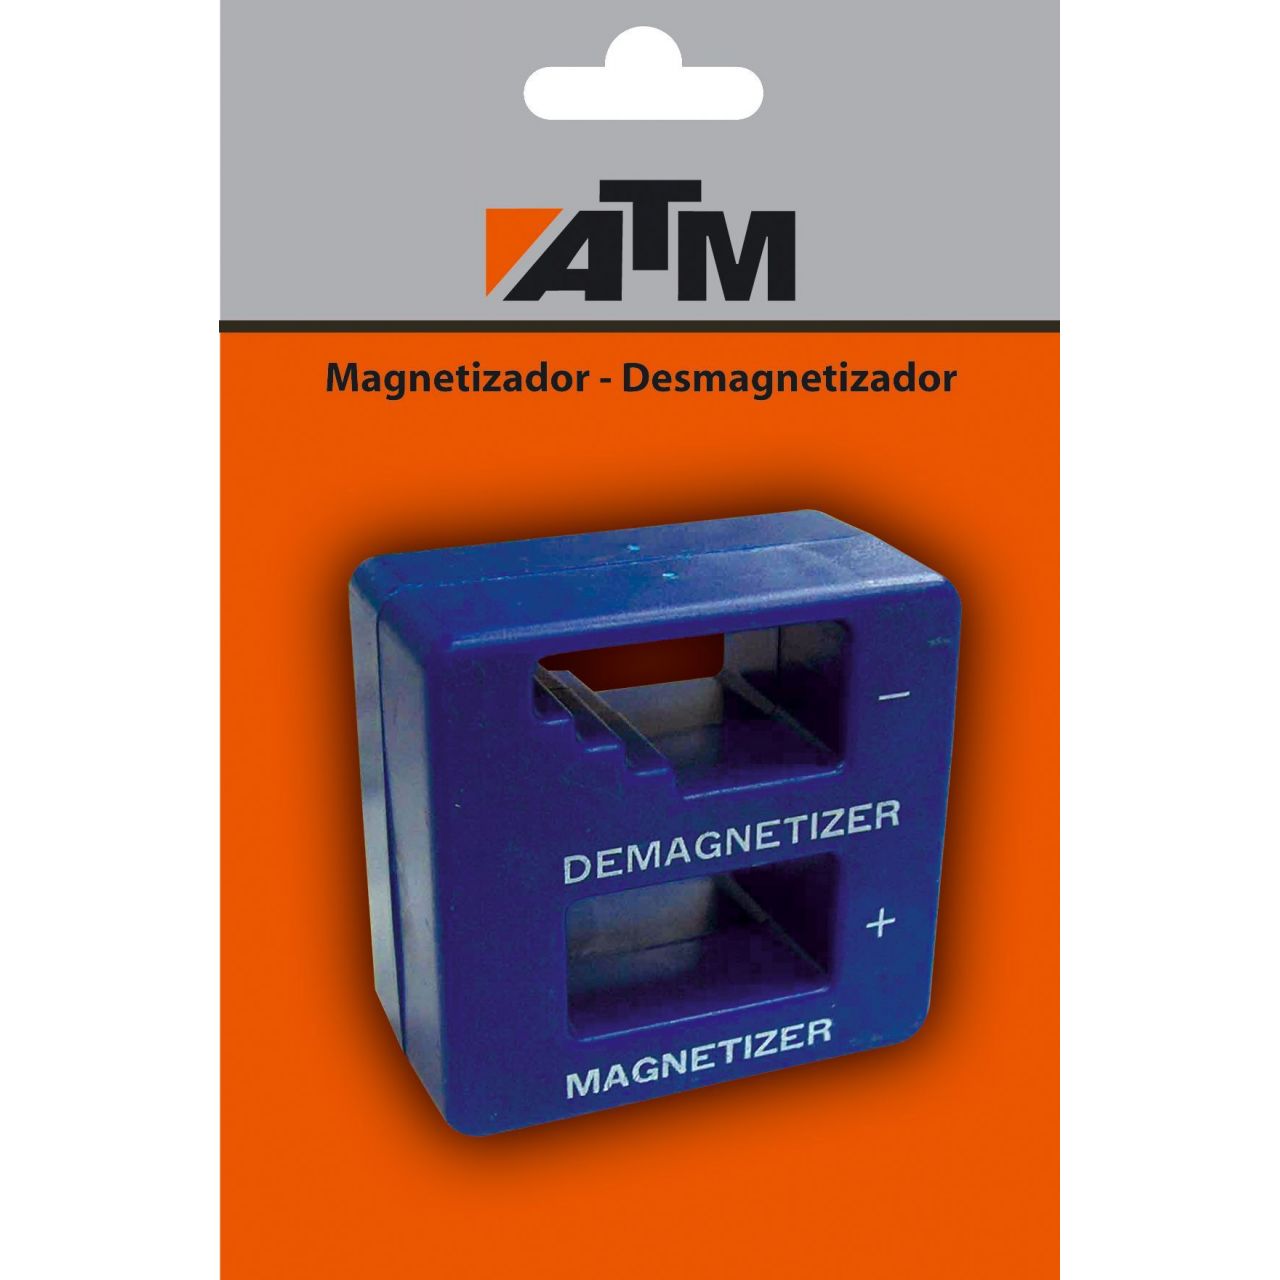 Magnetizador-desmagnetizador (50 x 40 x 28 mm)